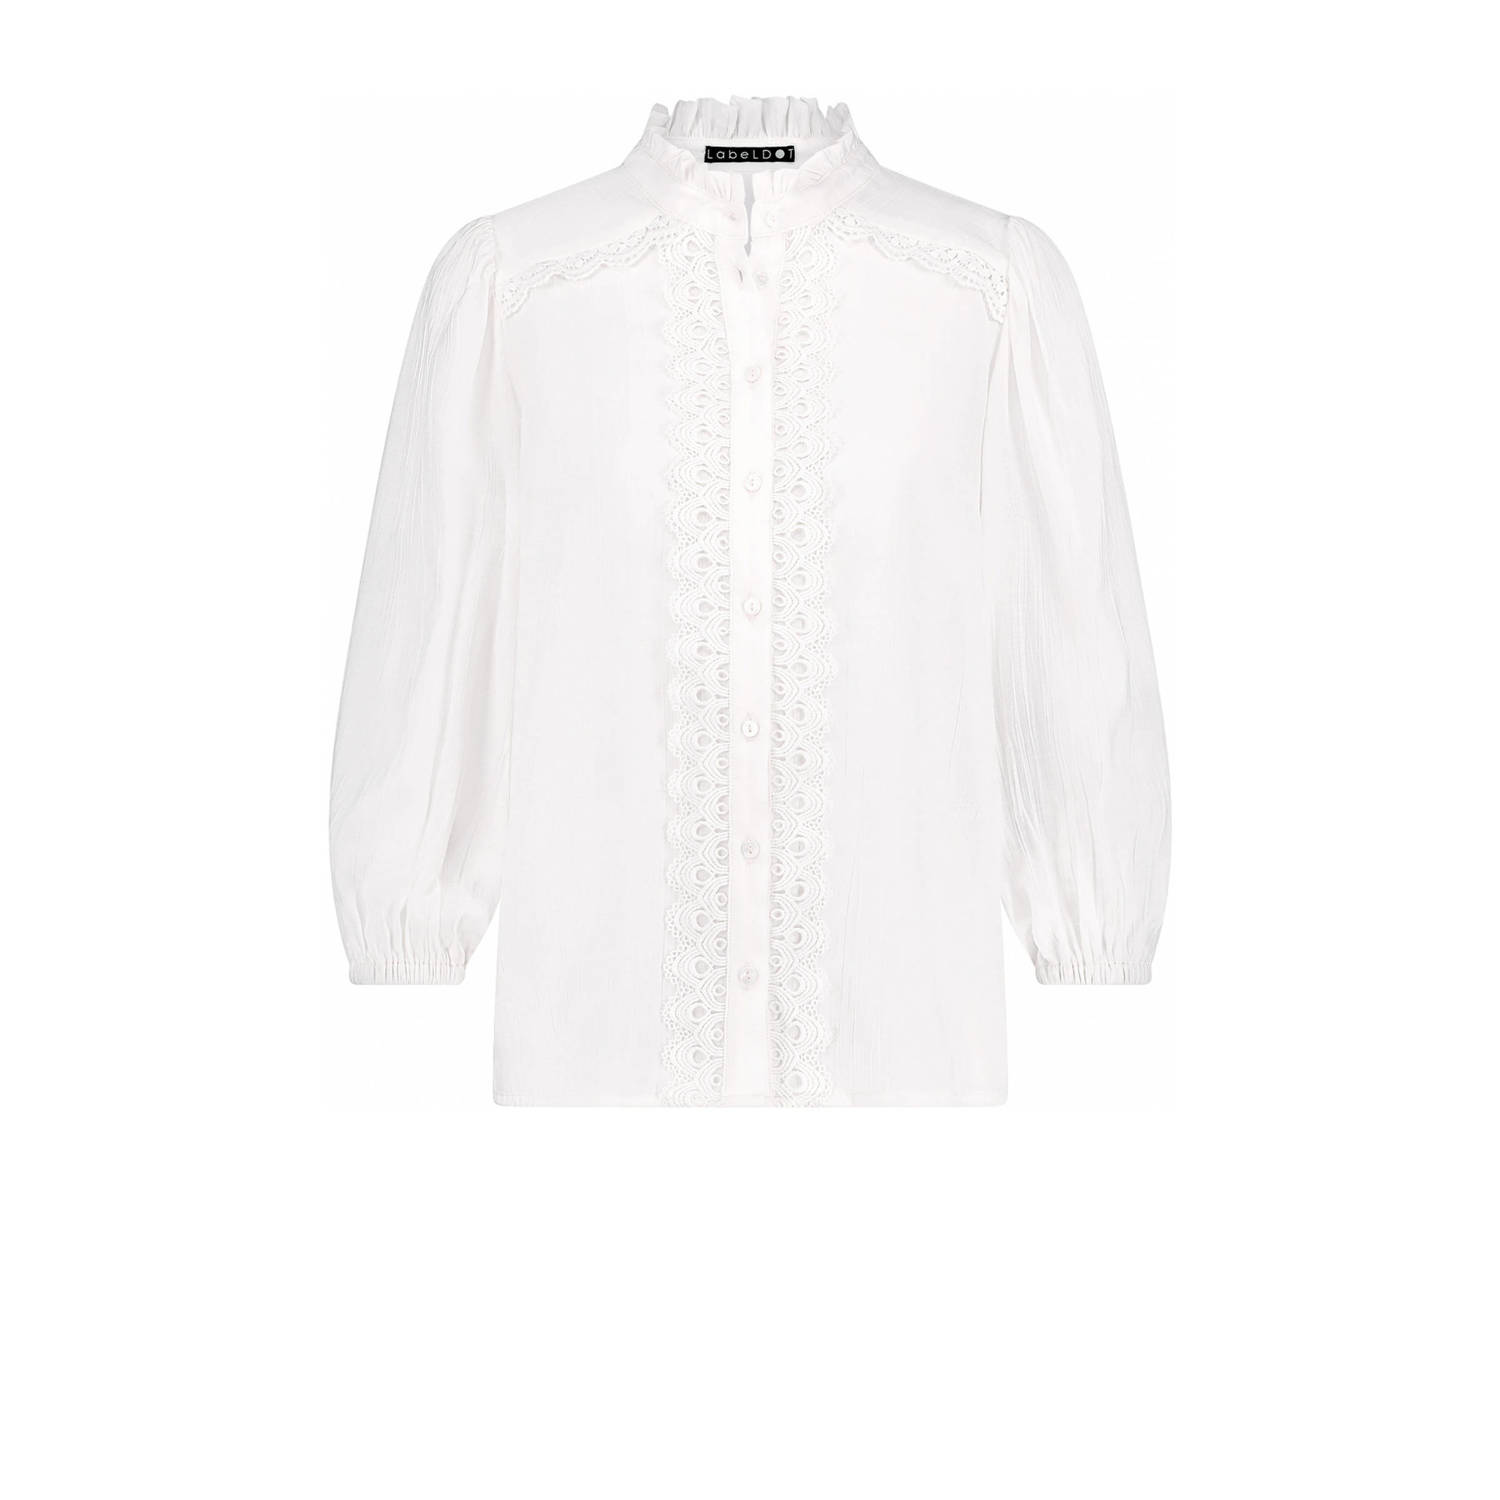 LabeL DOT semi-transparante blouse Alaia wit